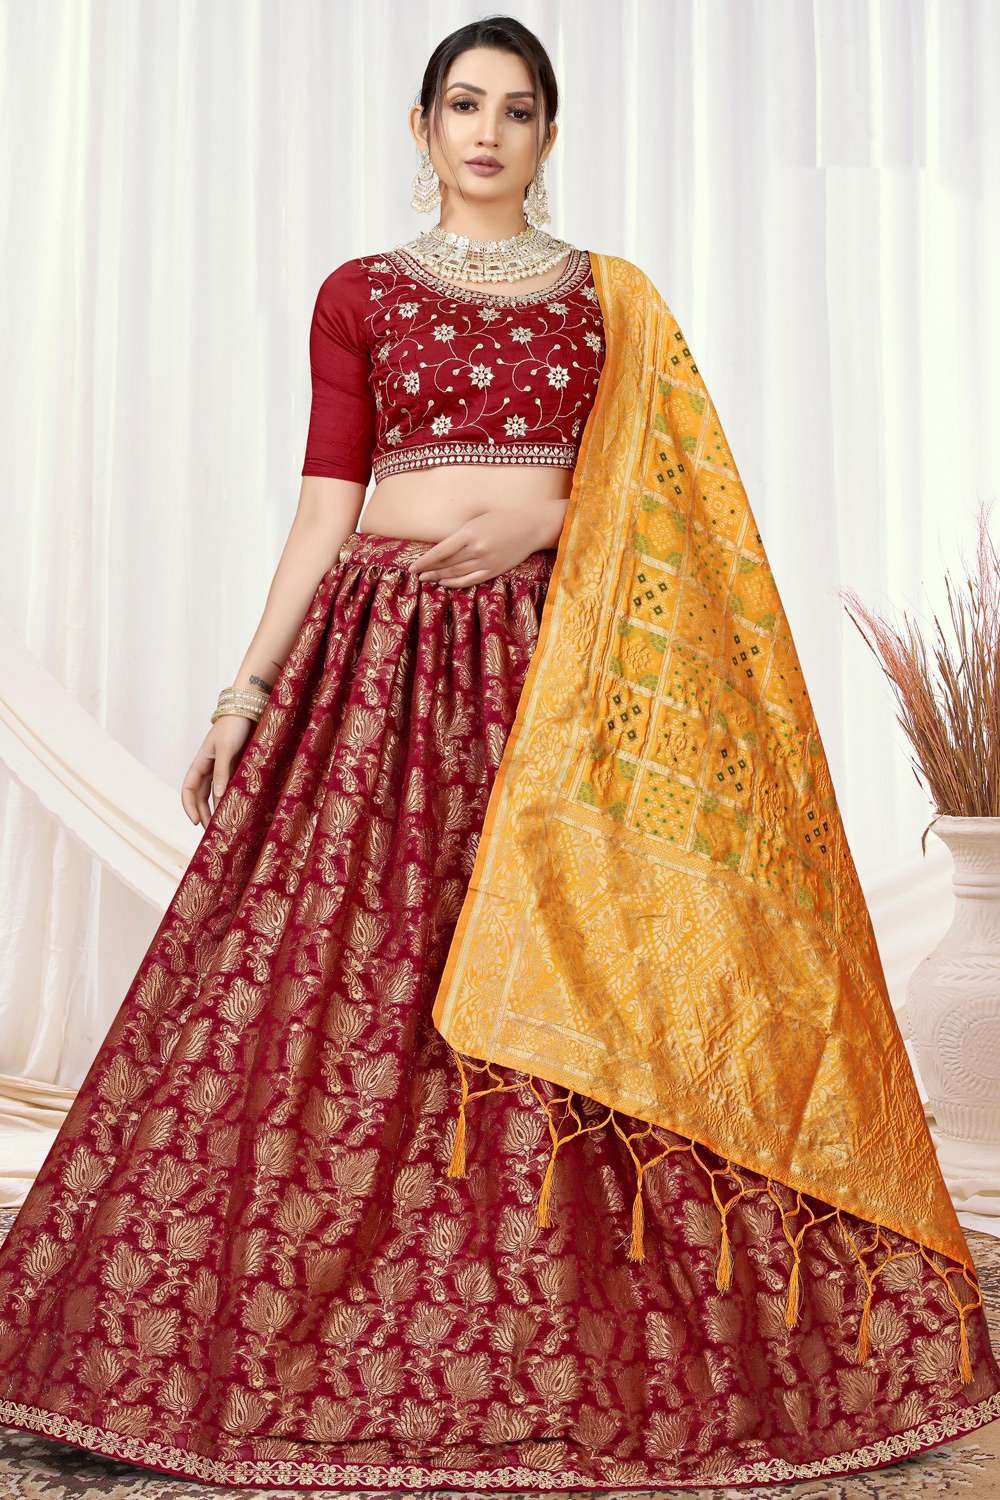 Designer Wear Bridal Collection 2020 - Dusty Gold Maroon Lehenga Choli |  Pakistani bridal wear, Bridal lehenga collection, Pakistani bridal dresses